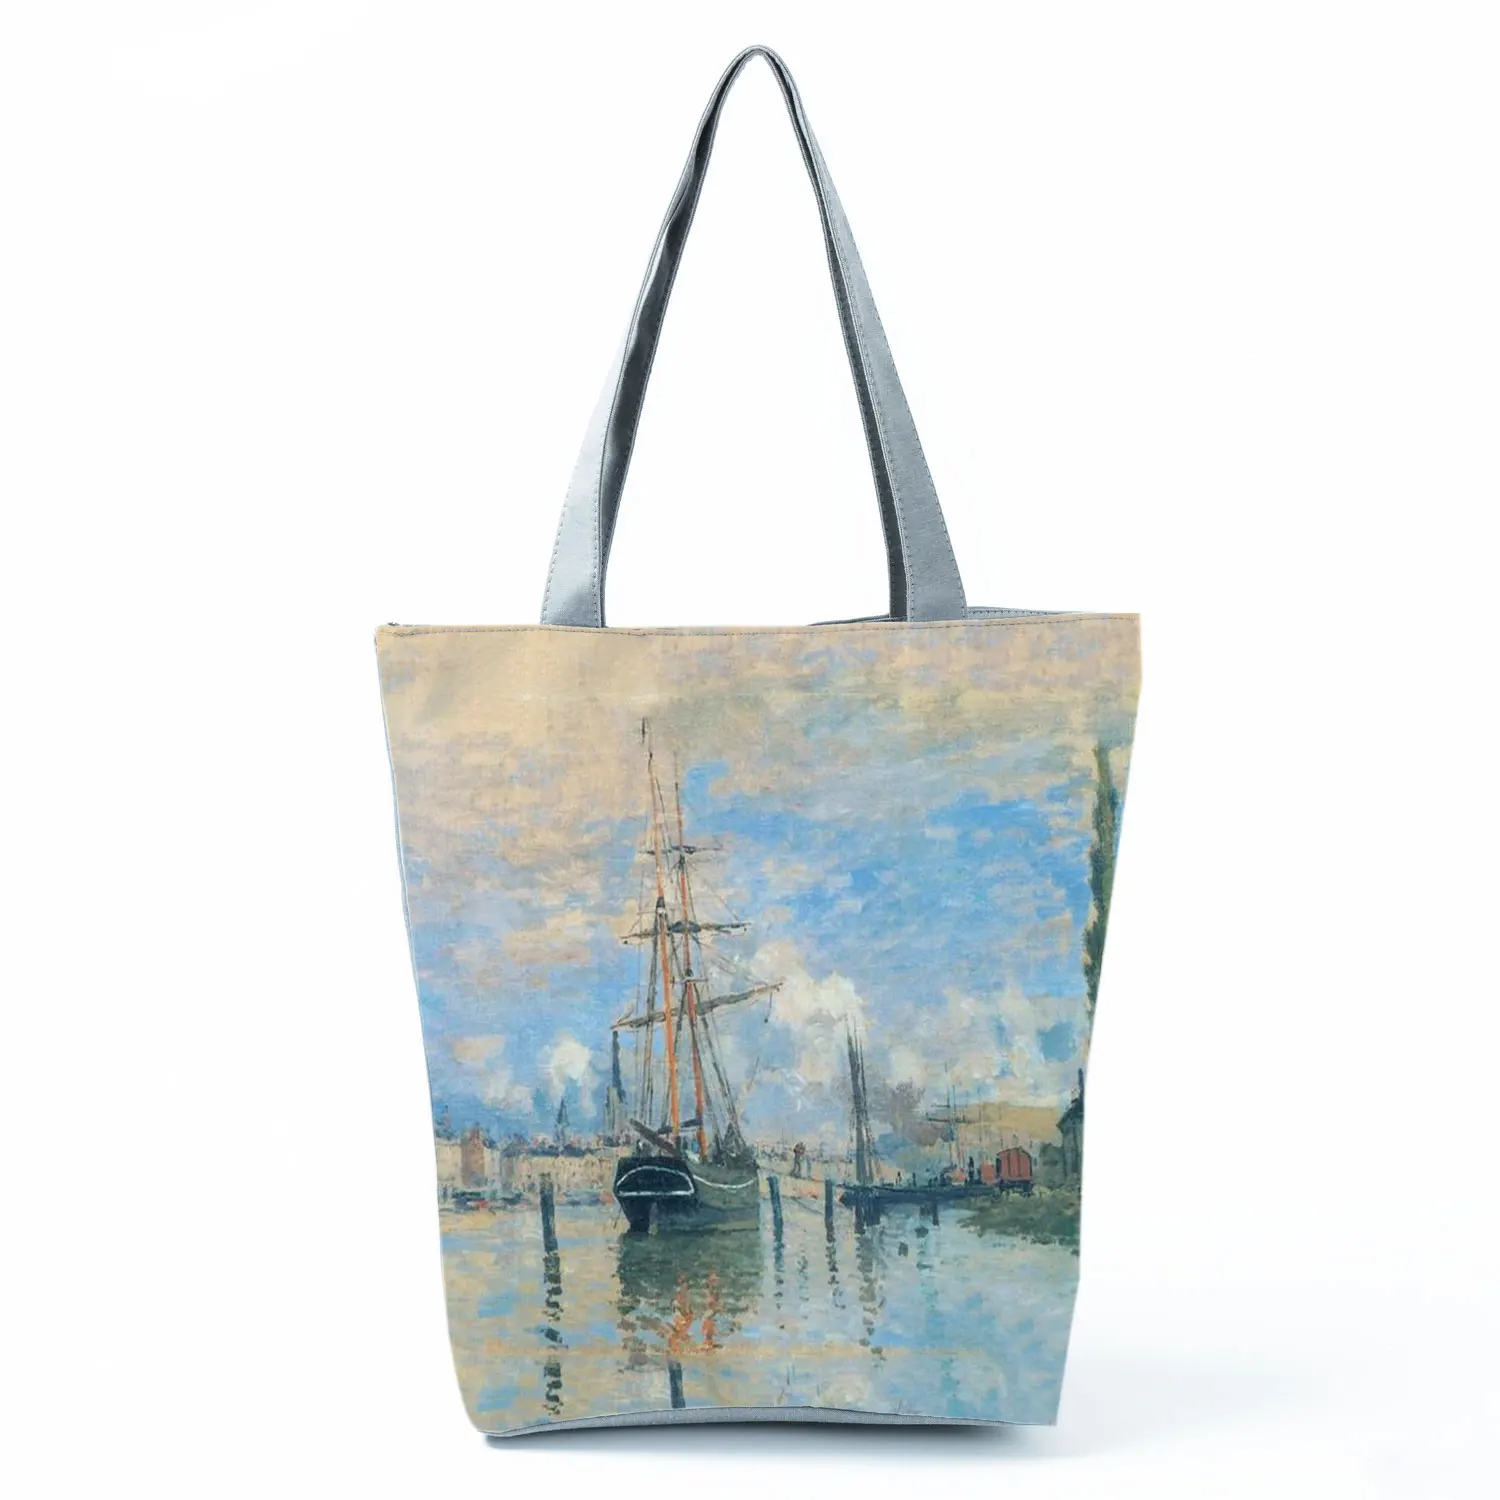 New Van Gogh Oil Painting Tote Bag Retro Art Fashion Travel Bag Women Casual Eco Shopping High Quality Foldable Shoulder Handbag 